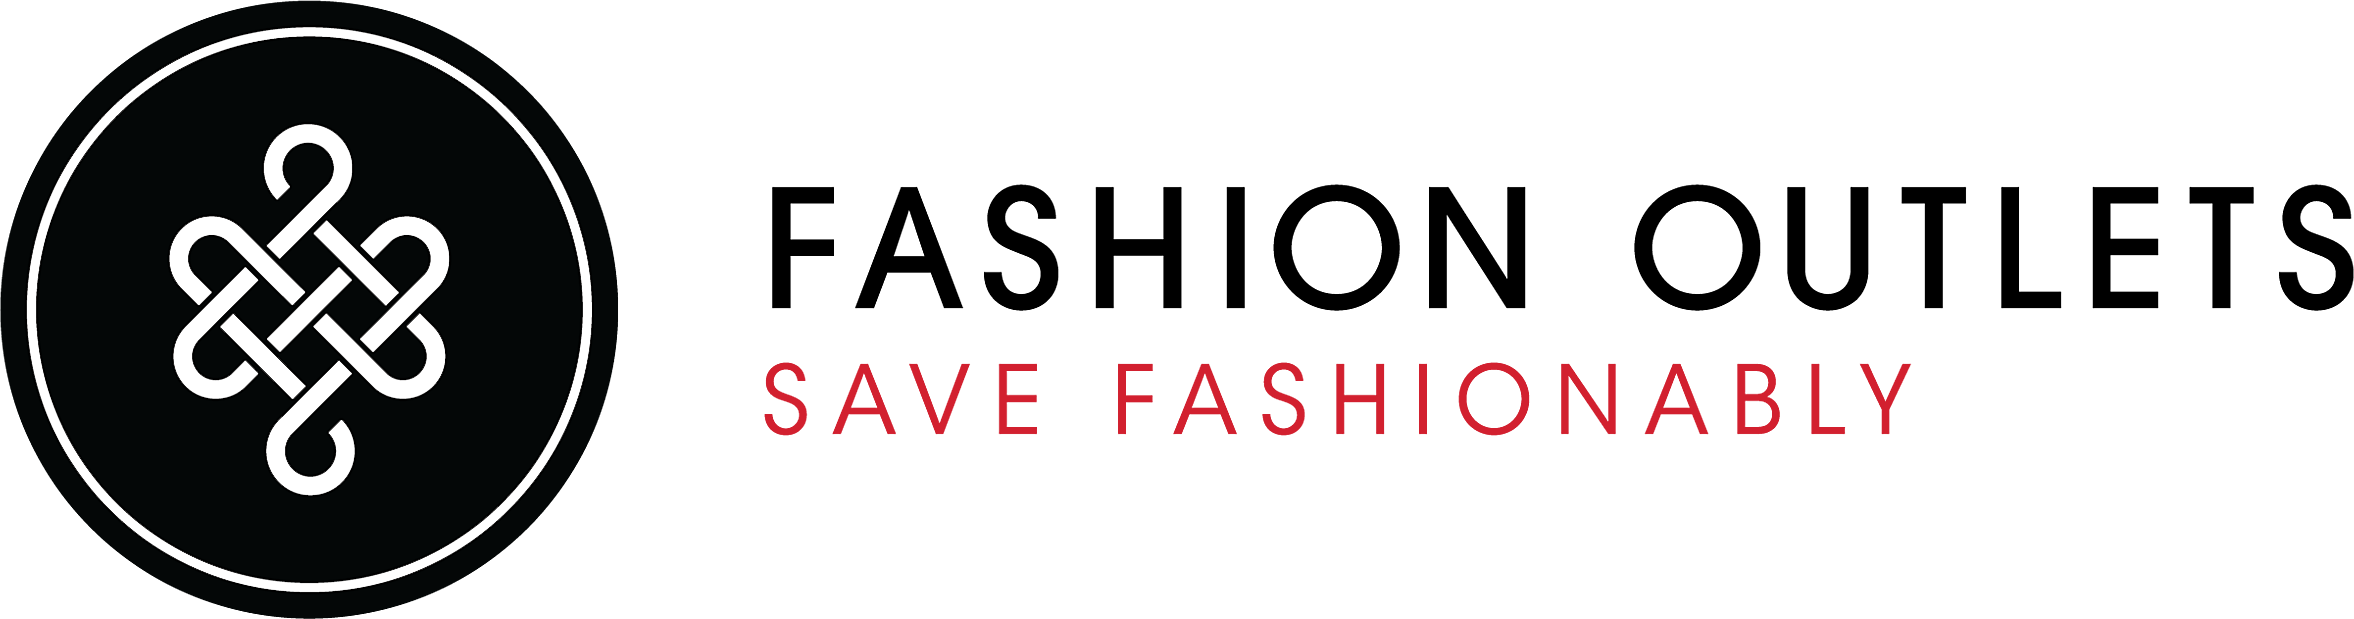 Fashion Outlets Save Fashionably